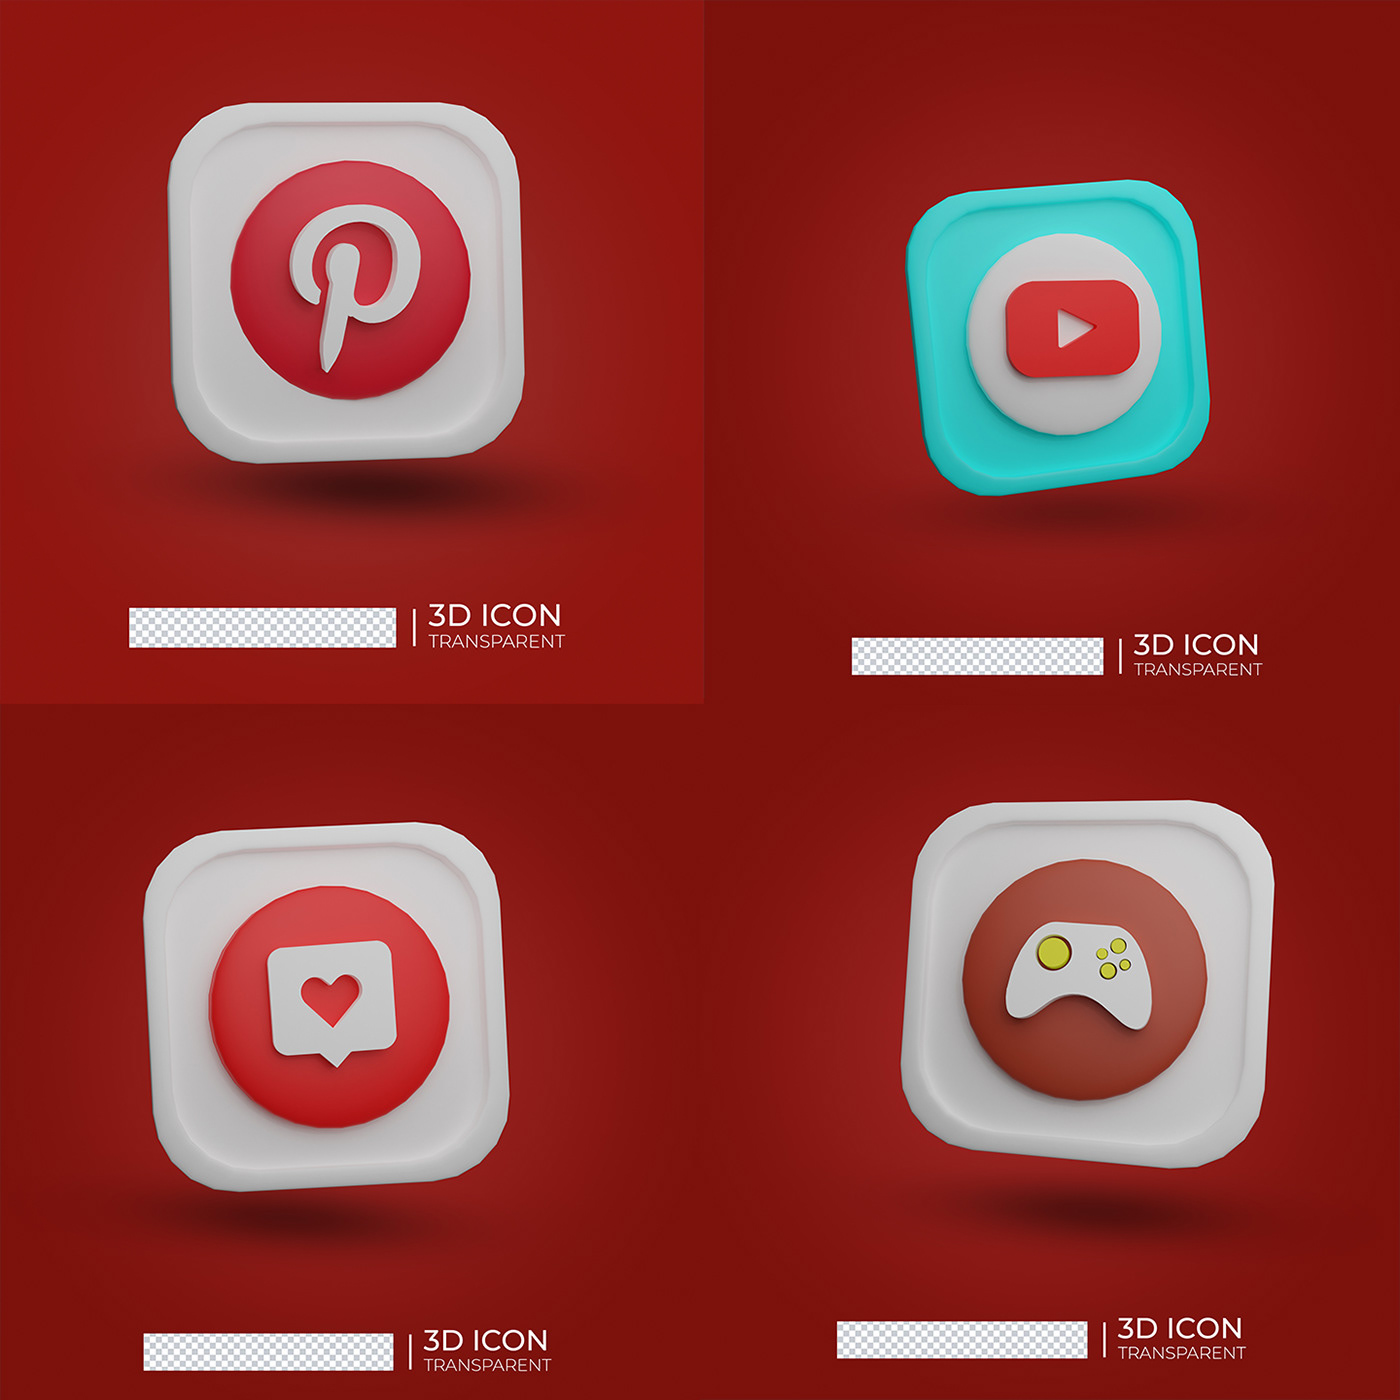 3D 3d icon 3d icon 2021 free 3d icon free social media icon icon pack icons social media social media 3d icons social media icons